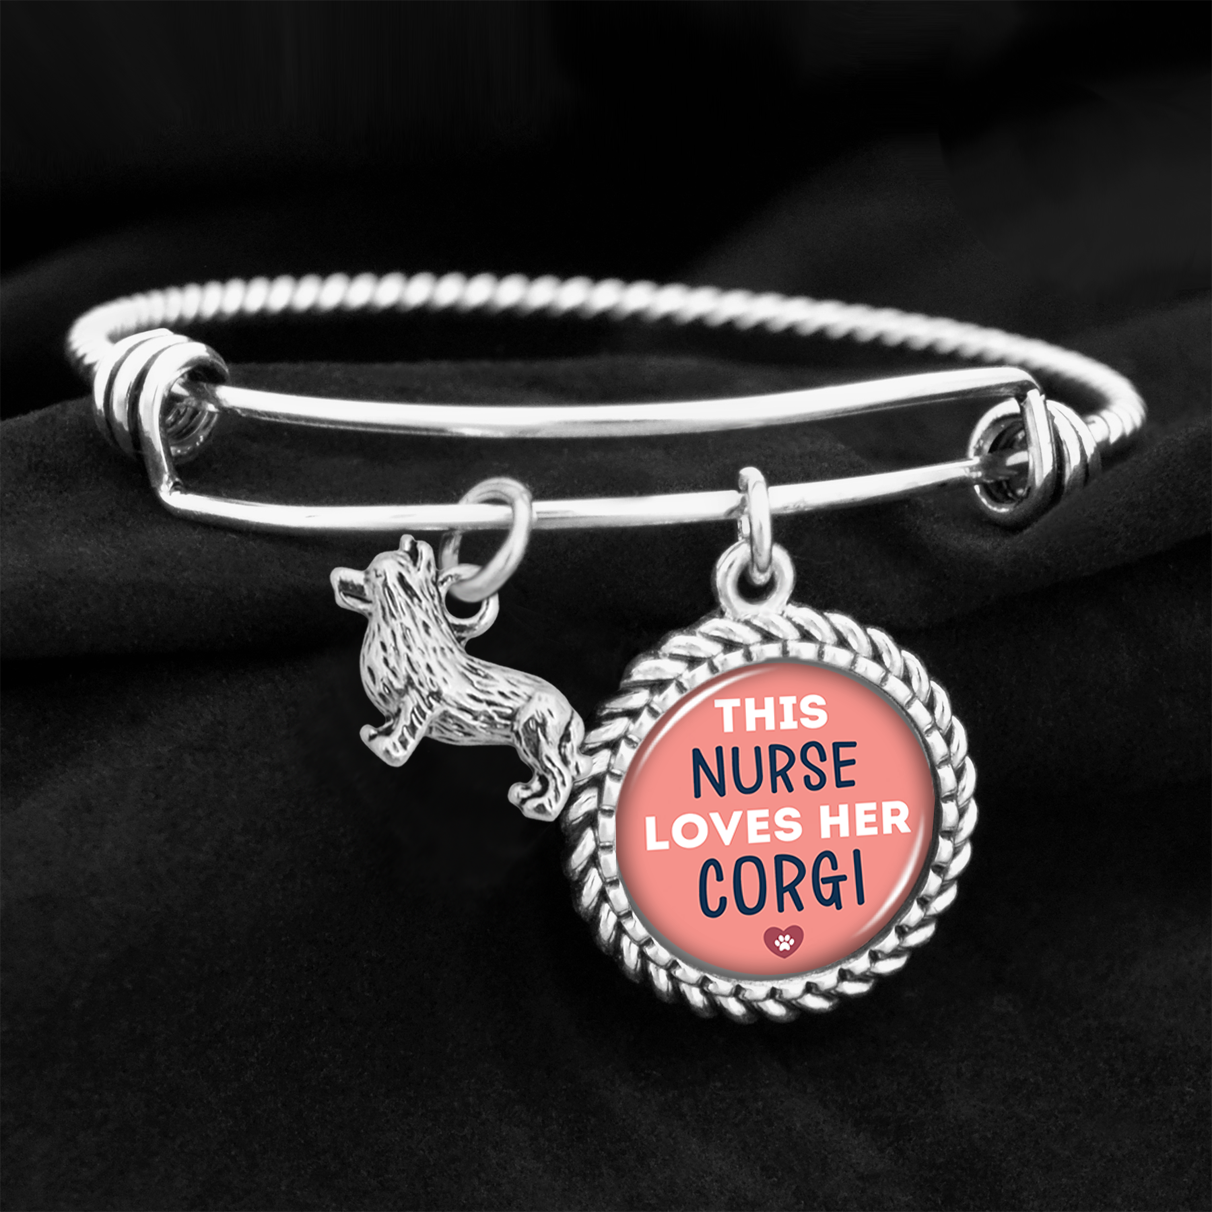 This Nurse Loves Her Corgi Charm Bracelet